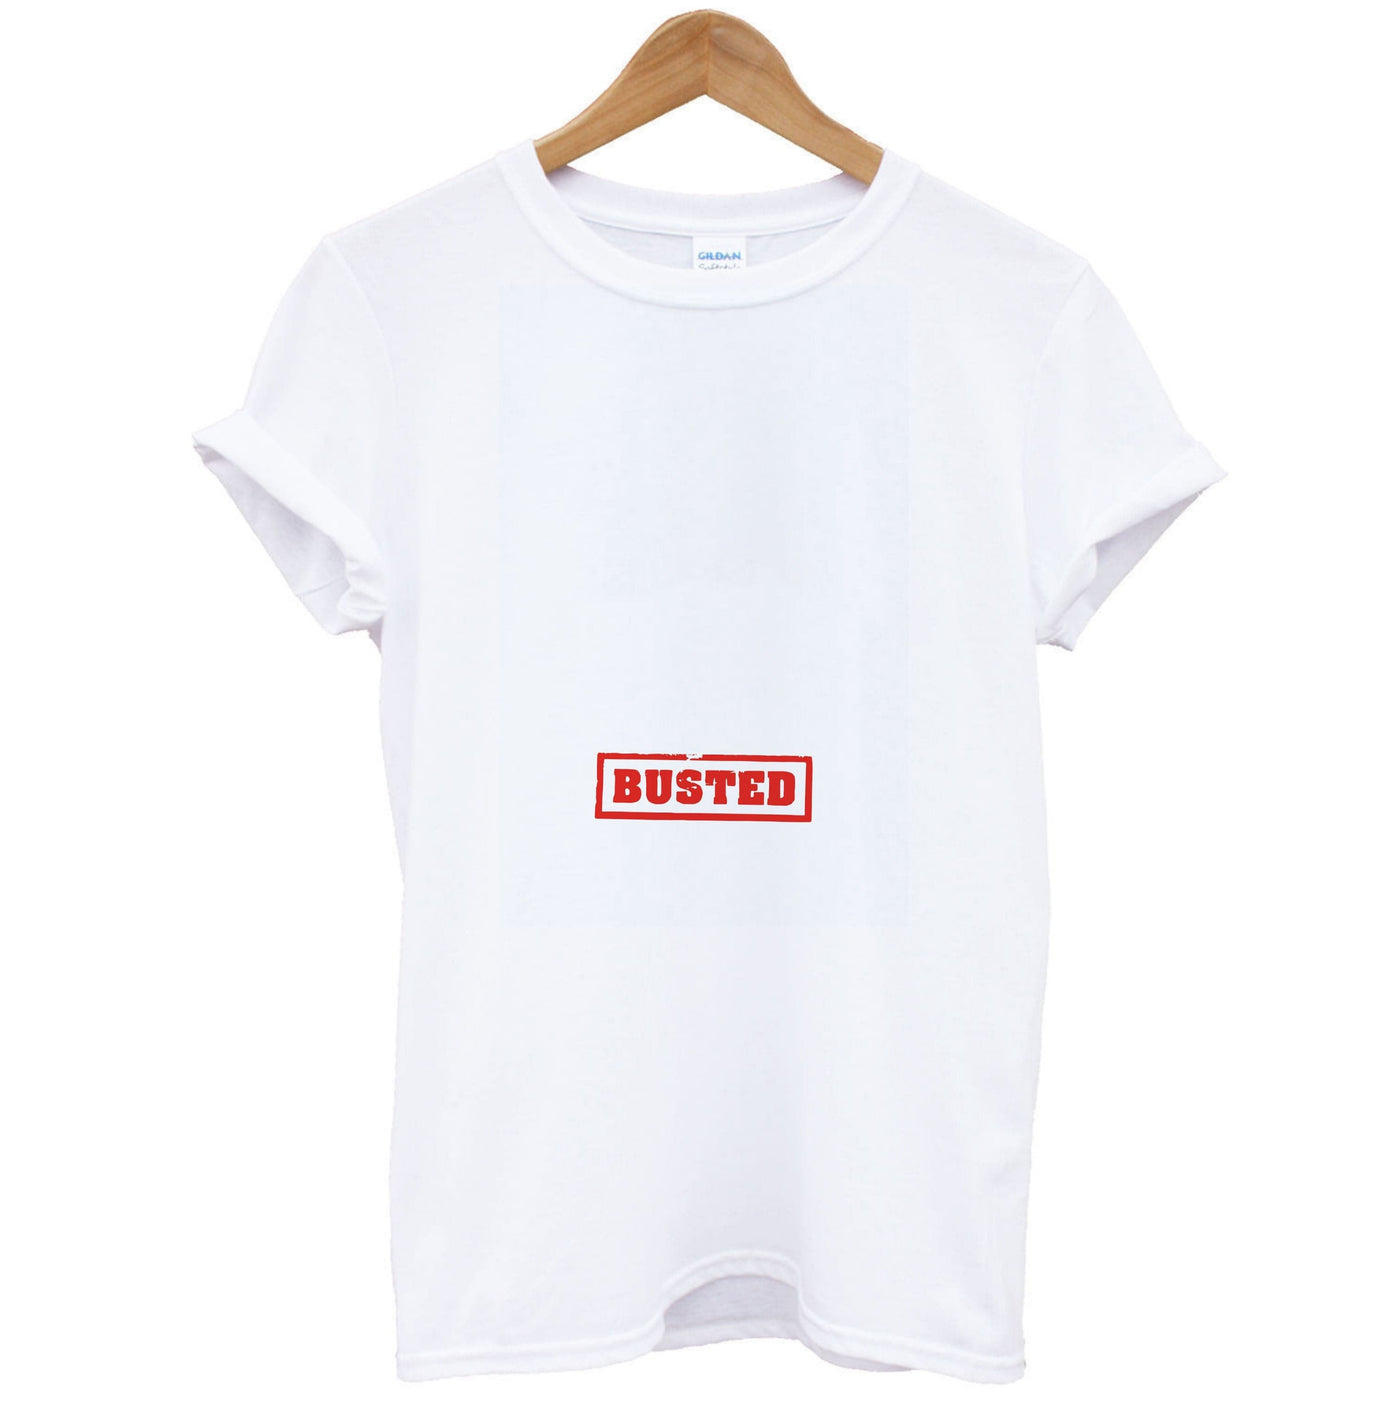 Band Logo - Busted T-Shirt